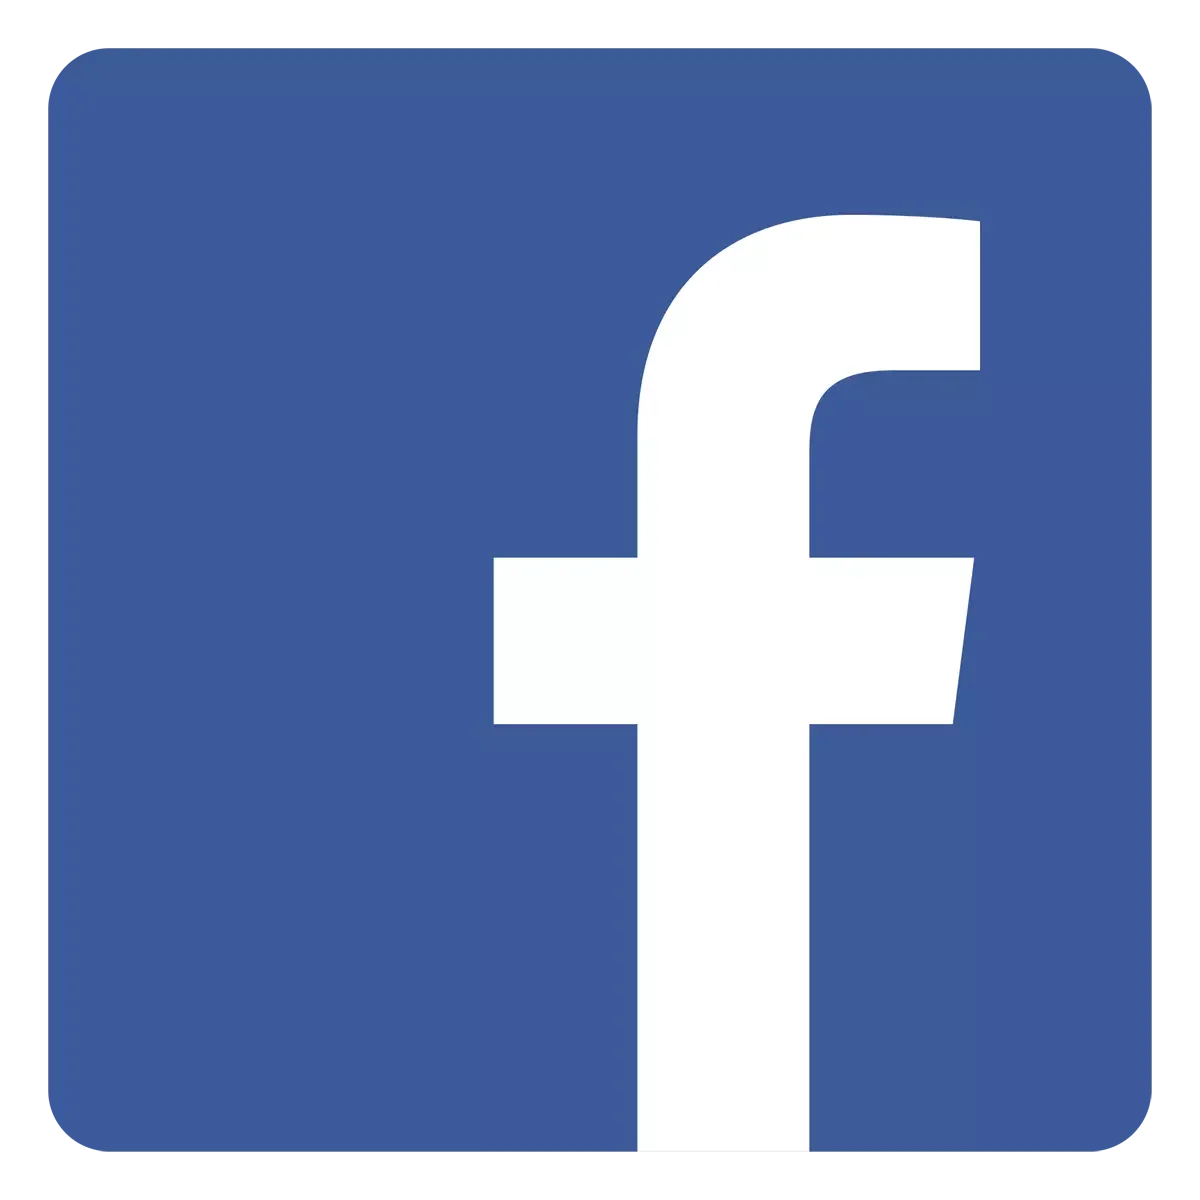 Joomla single sign-on sso (Social Login with Joomla) facebook